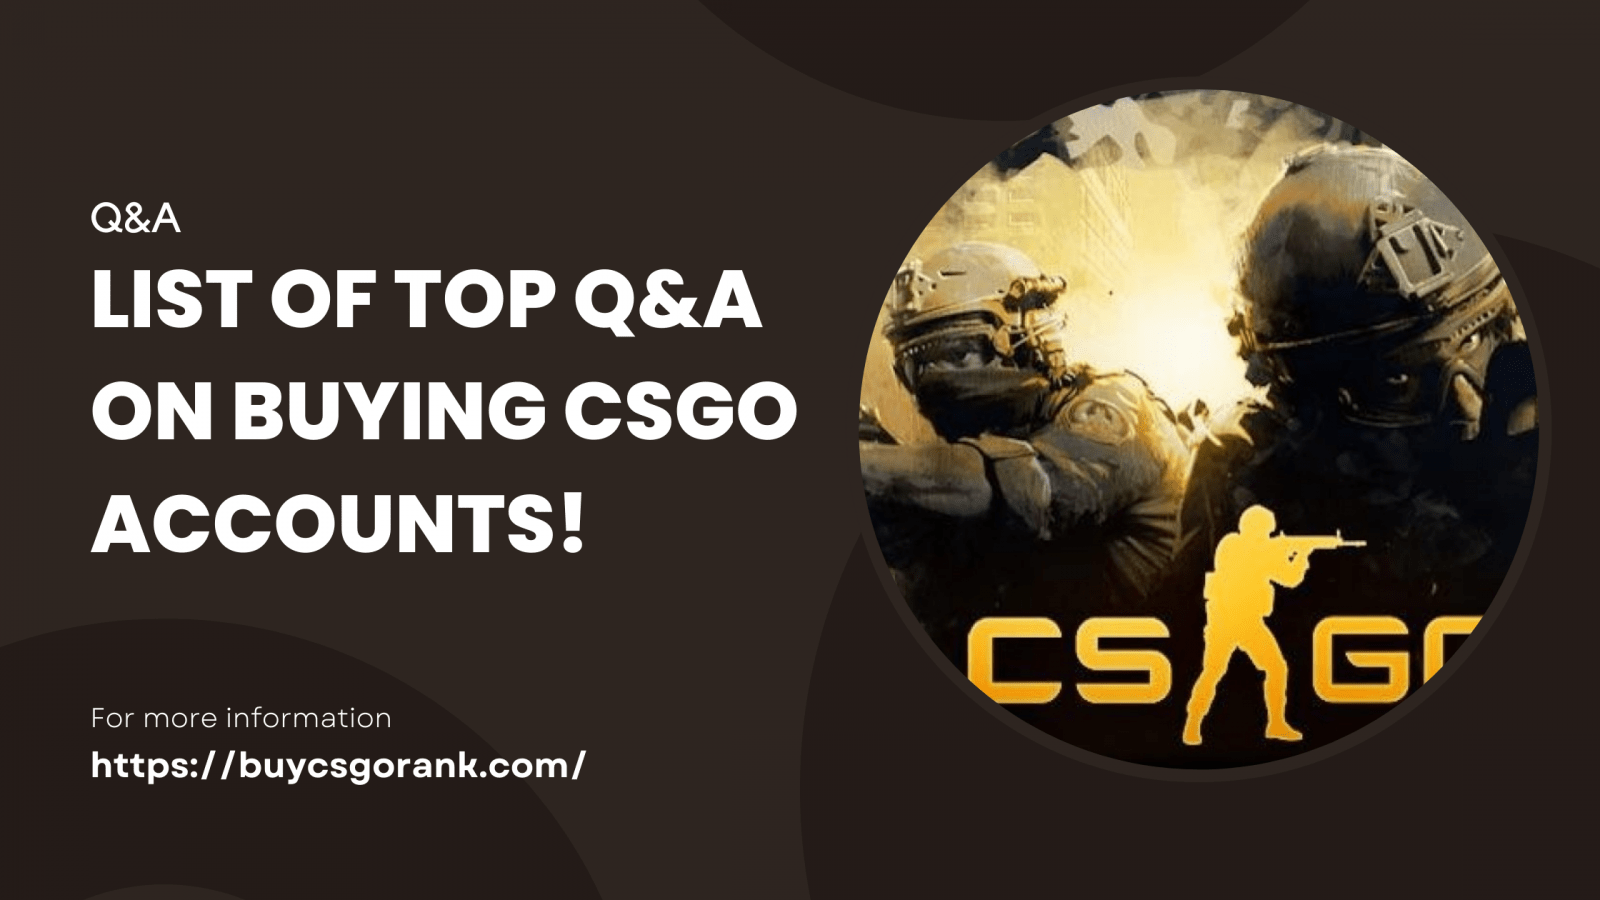 Q&A on CSGO Accounts